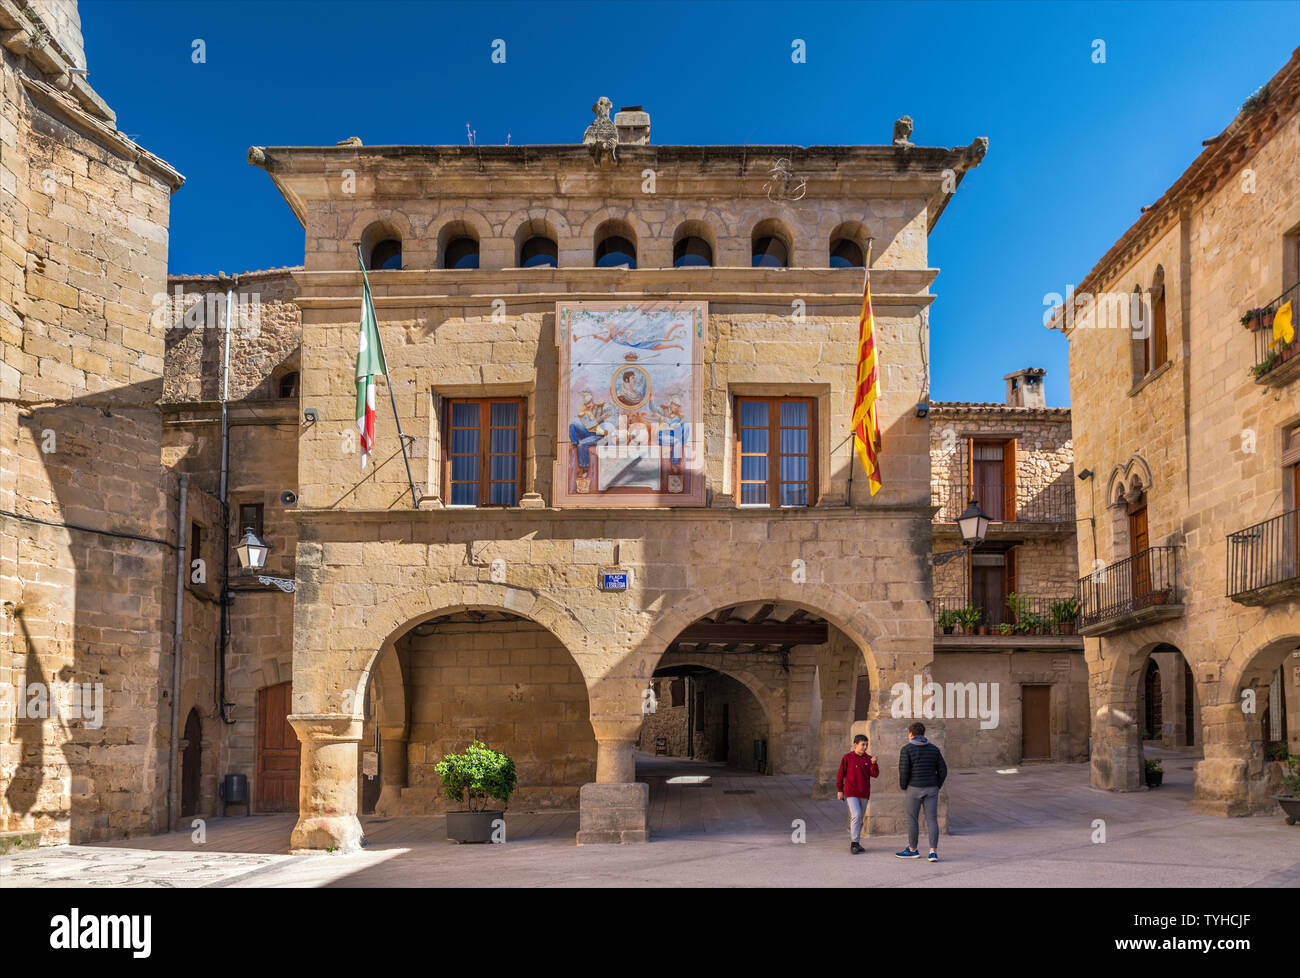 Ajuntament Horta de Sant Joan, town hall at Placa de l'Esglesia, hilltown of Horta de San Juan, Terra Alta (Castellania) wine region, Catalonia, Spain Stock Photo